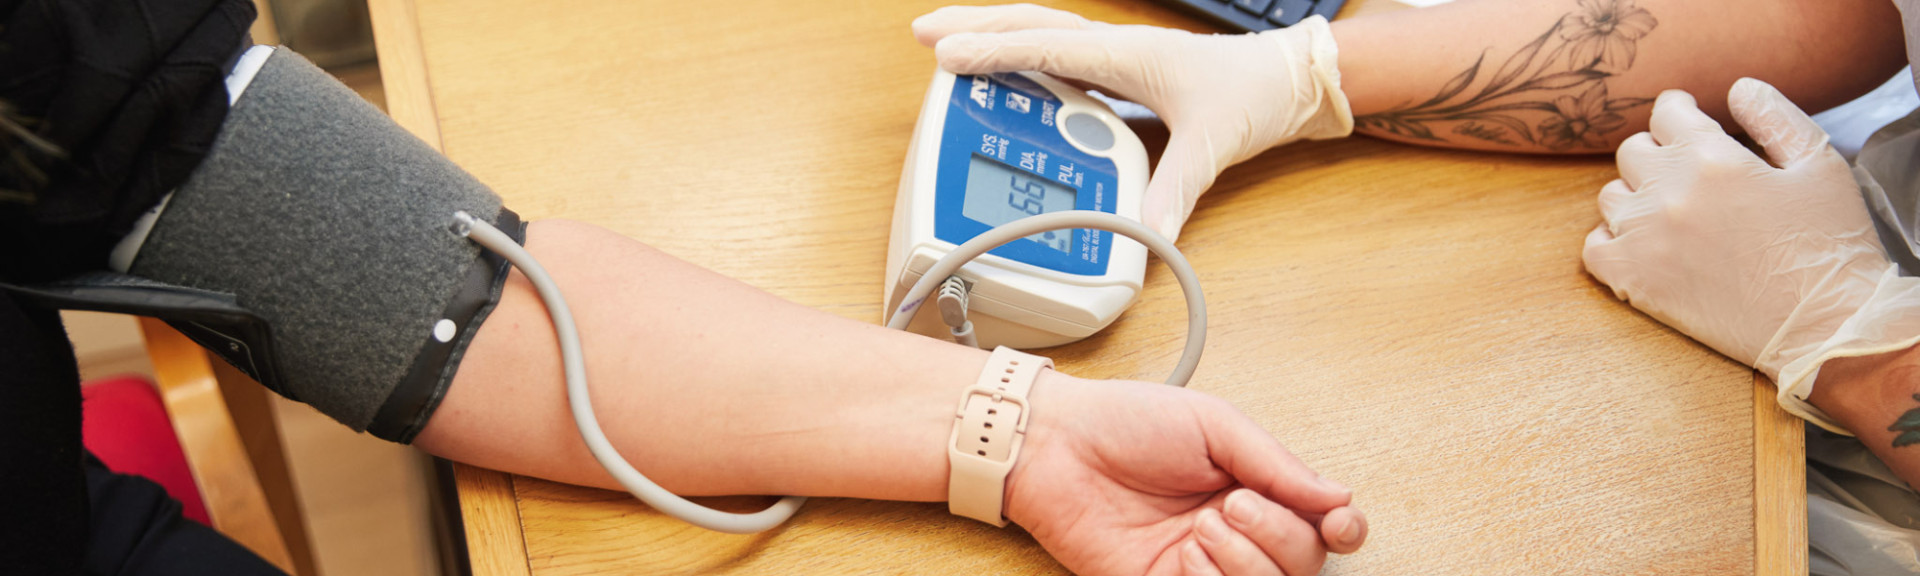 A photo showing a nurse taking a patients blood pressure